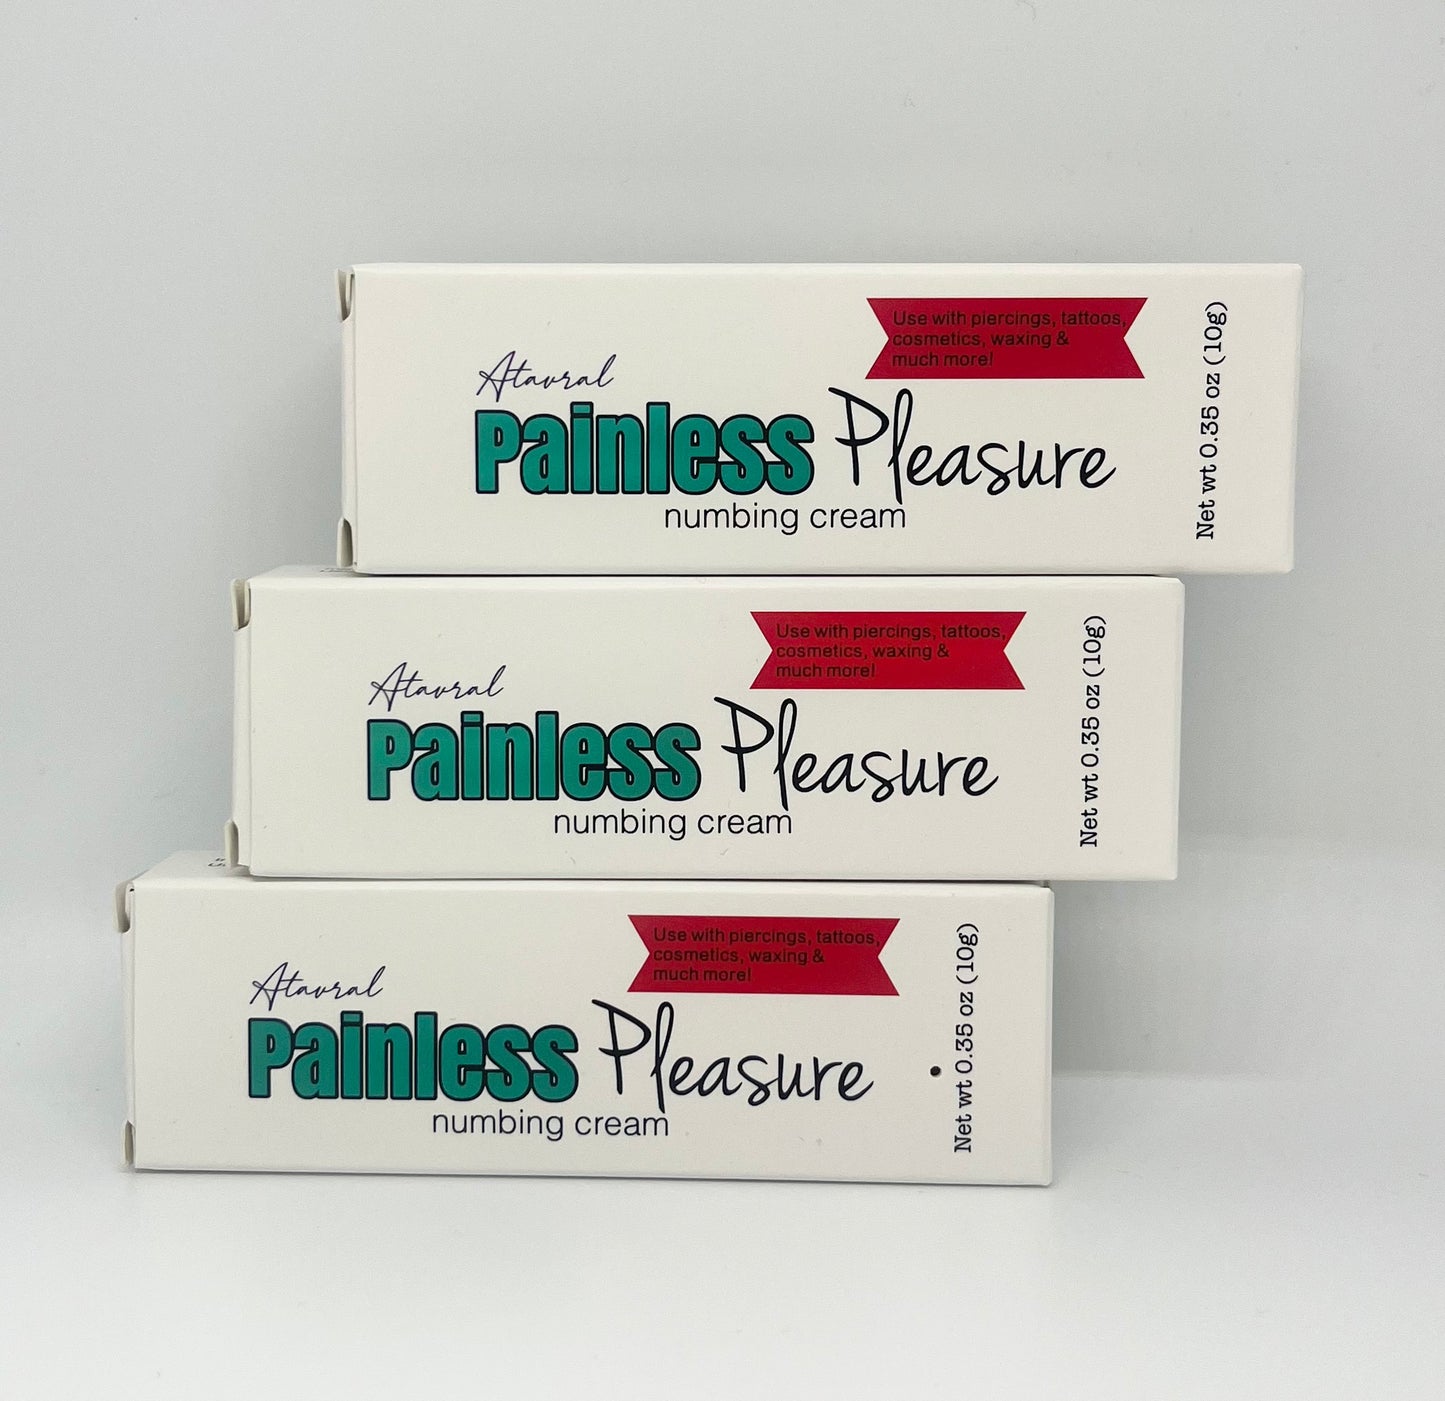 Painless Pleasure Numbing Cream